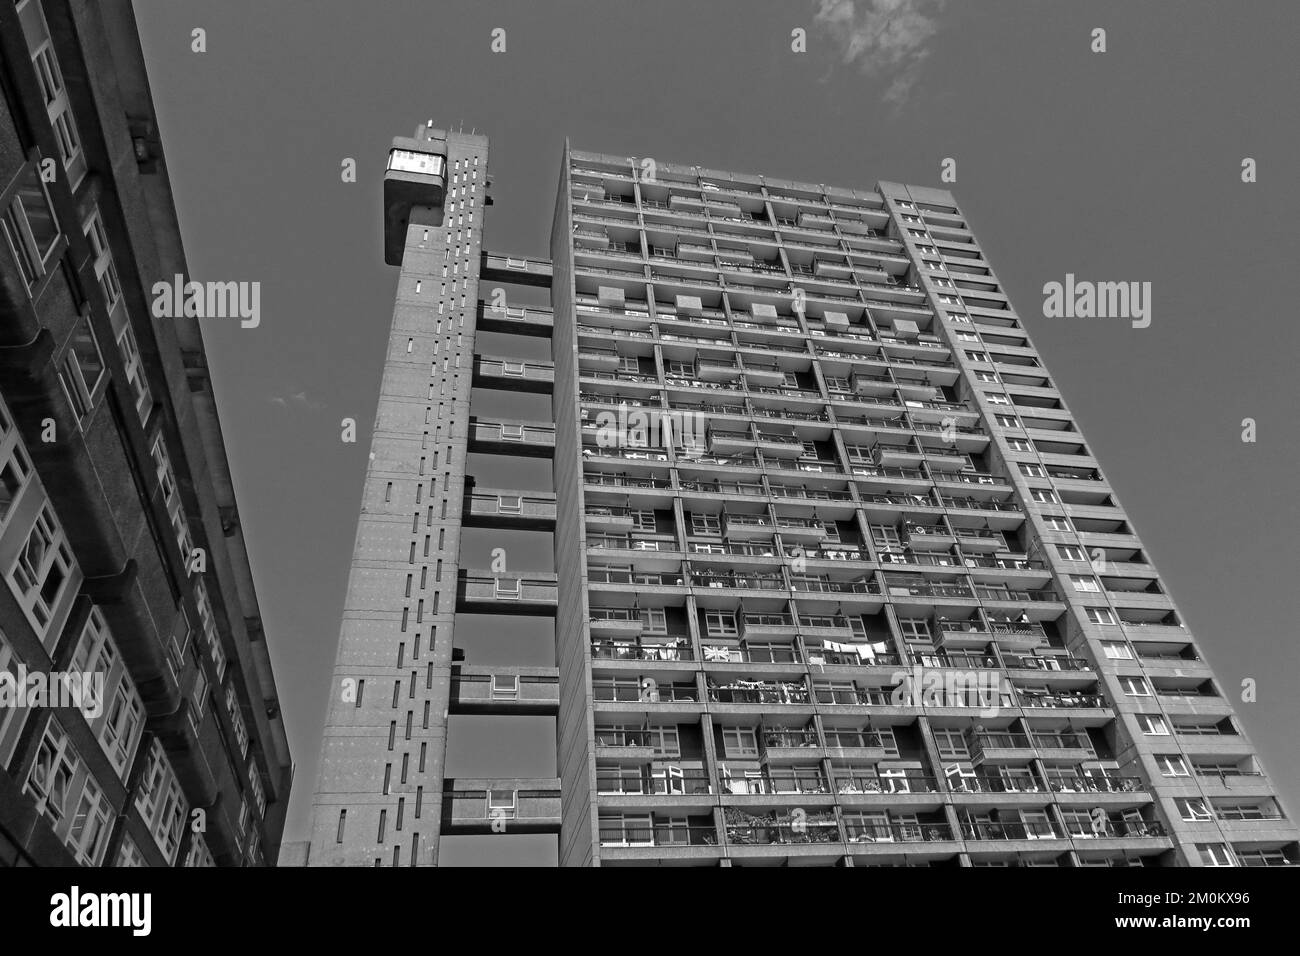 Trellick Tower Block, Cheltenham Estate, Golborne Road, Kensal Green, RBKC (Royal Borough of Kensington and Chelsea), London, England, W10 5PB Stockfoto